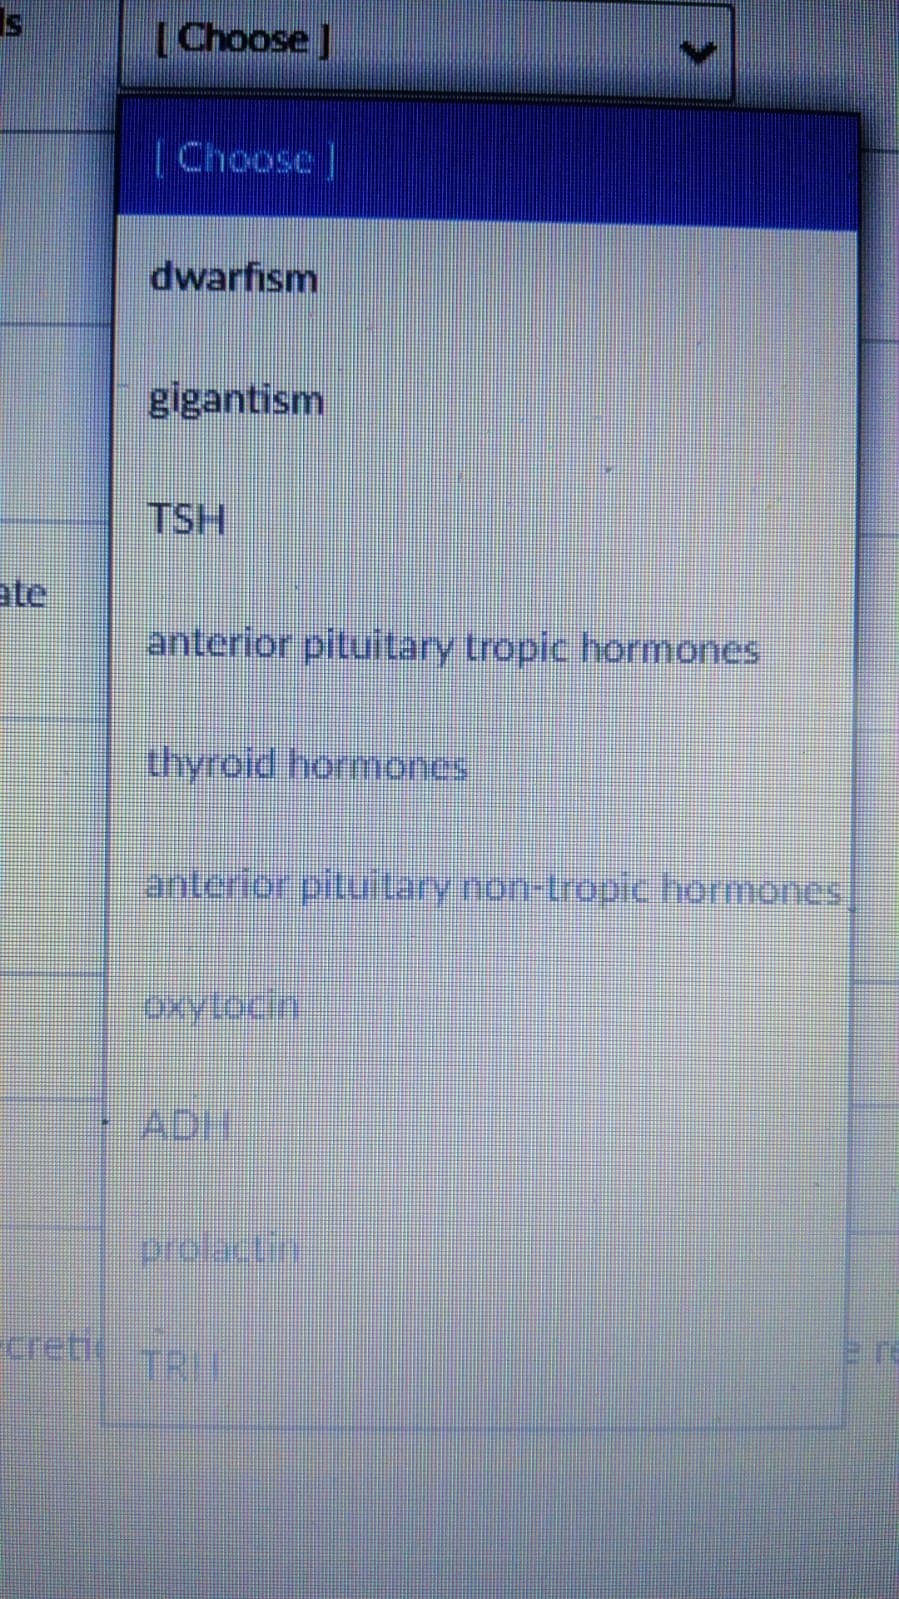 Is
[Choose ]
[Choose |
dwarfism
gigantism
TSH
ate
anterior pituitary tropic hormones
thyroid hormoncs
anterior pitulary non-tropic hormones
oxyloch
ADH
prolecti
creti
TRIT
e re
